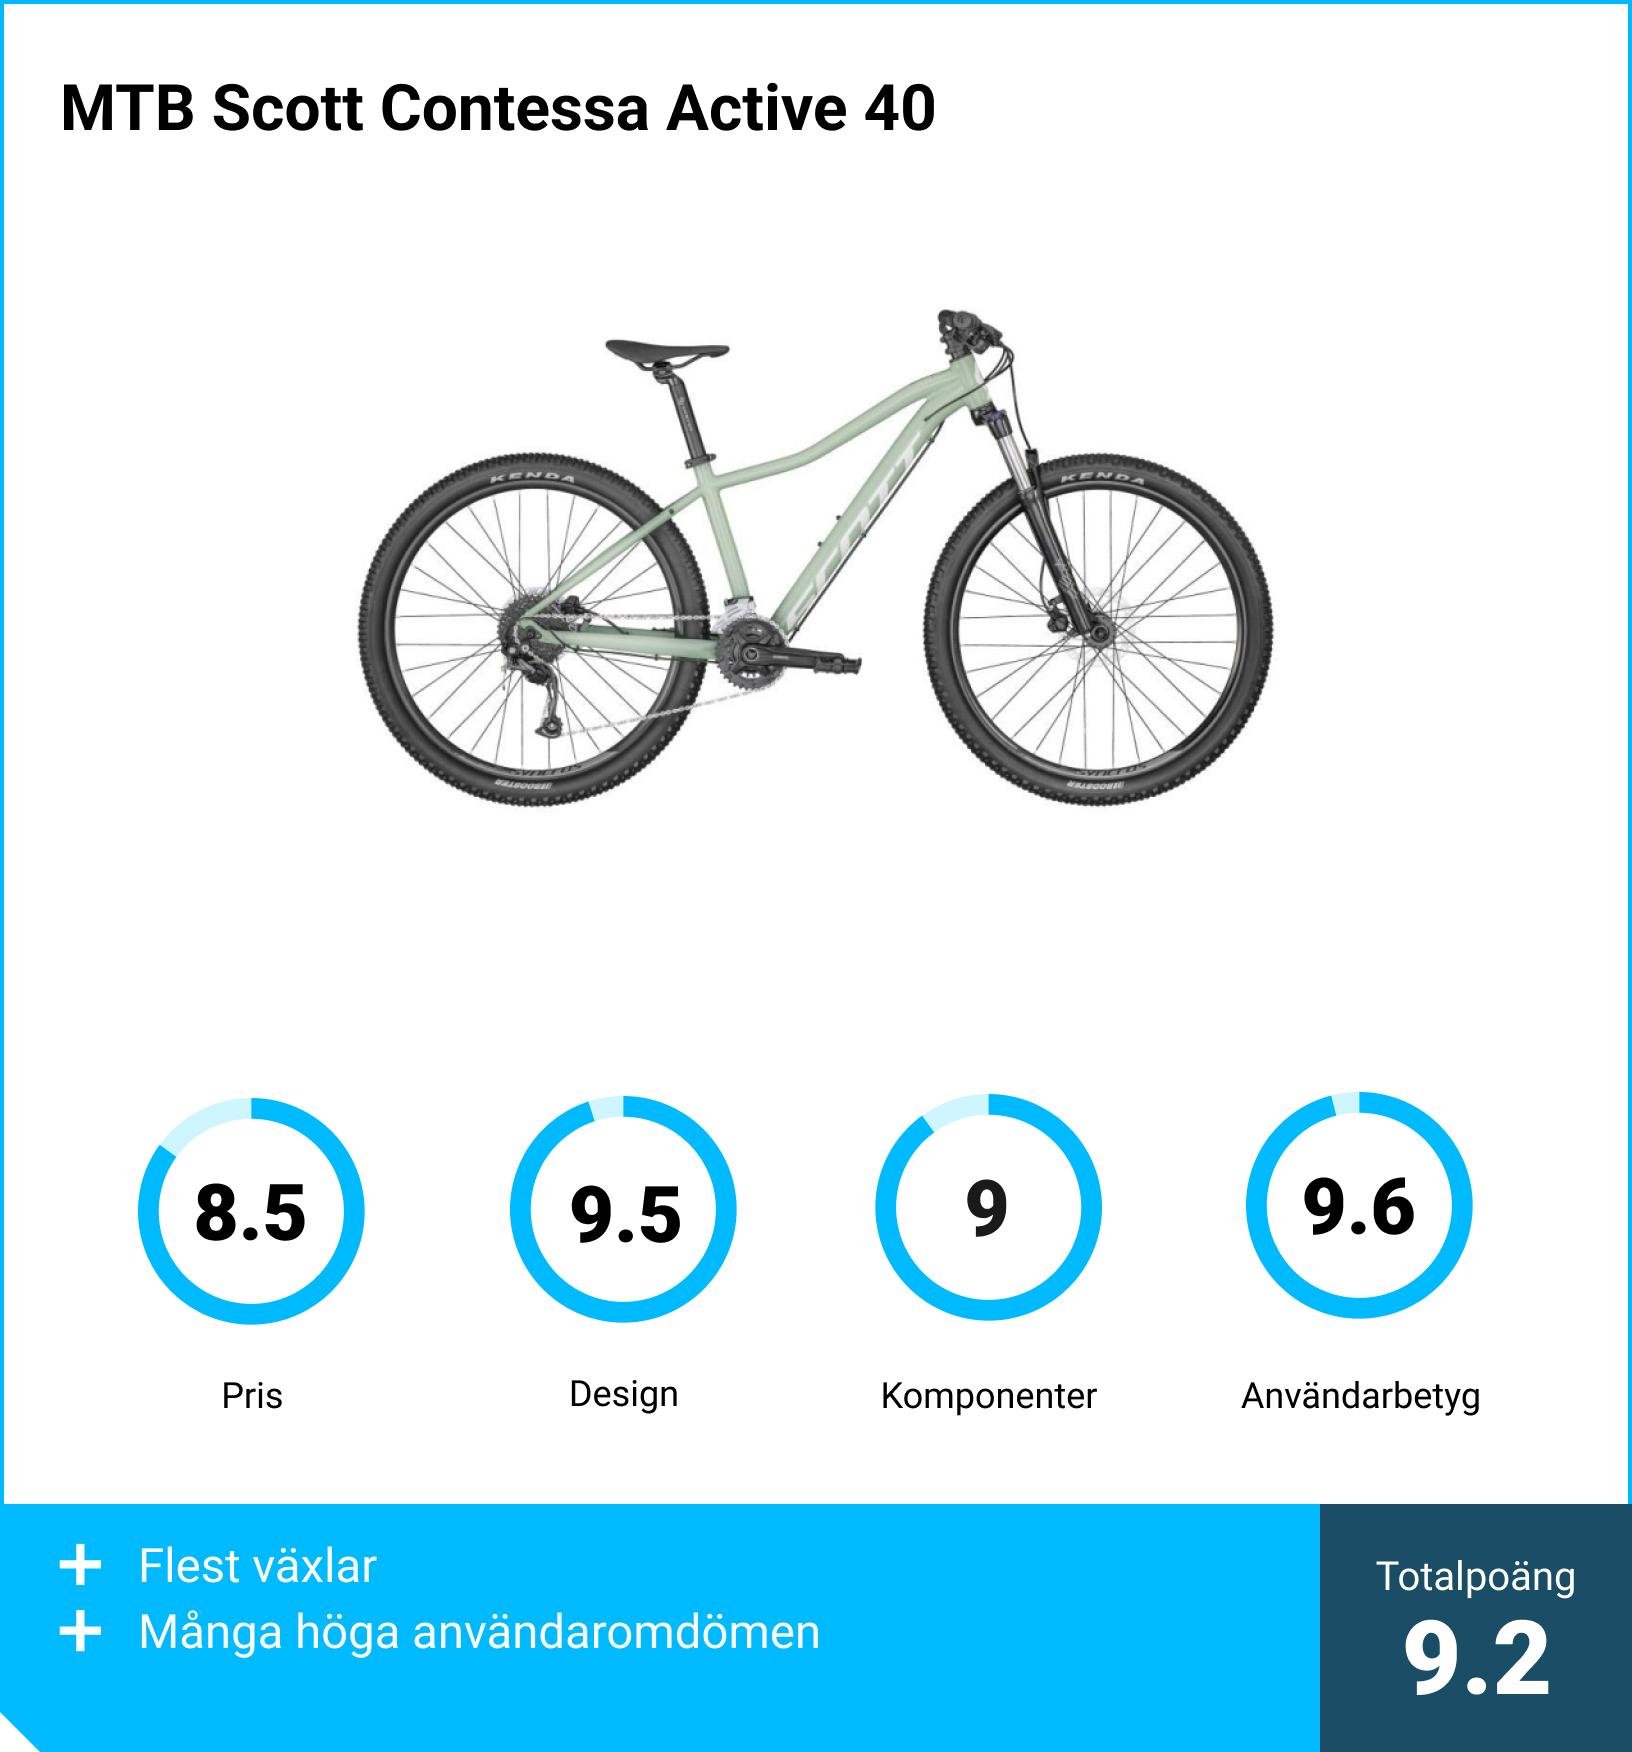 Mountainbike dam bäst i test - MTB Scott Contessa Active 40